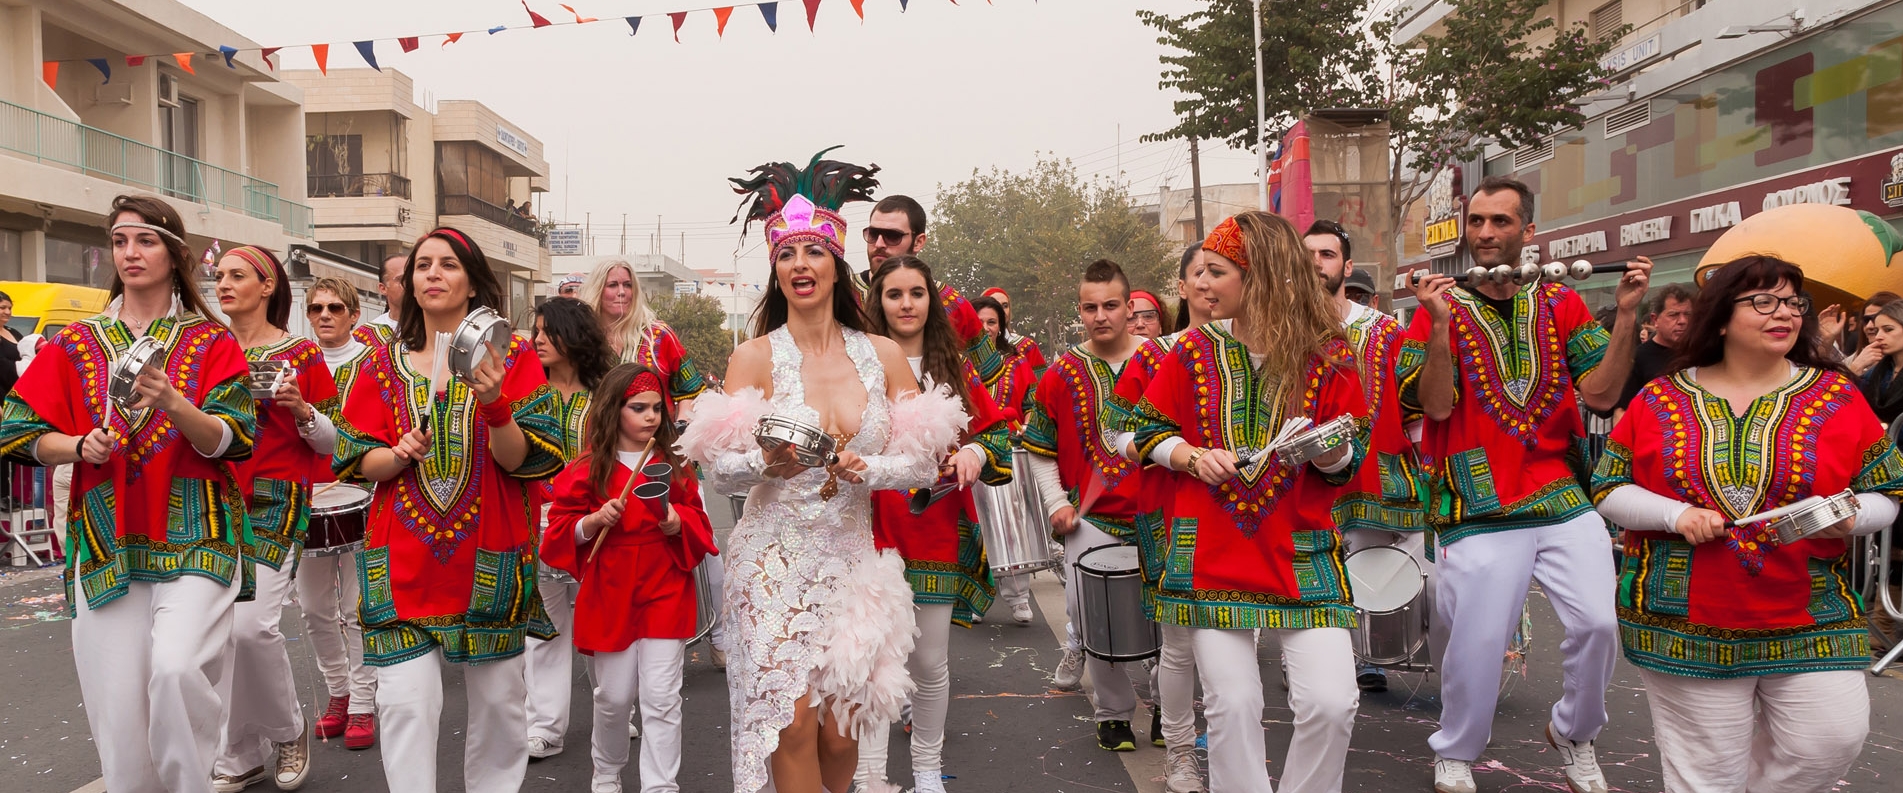 Limassol Carnival Festival 2017